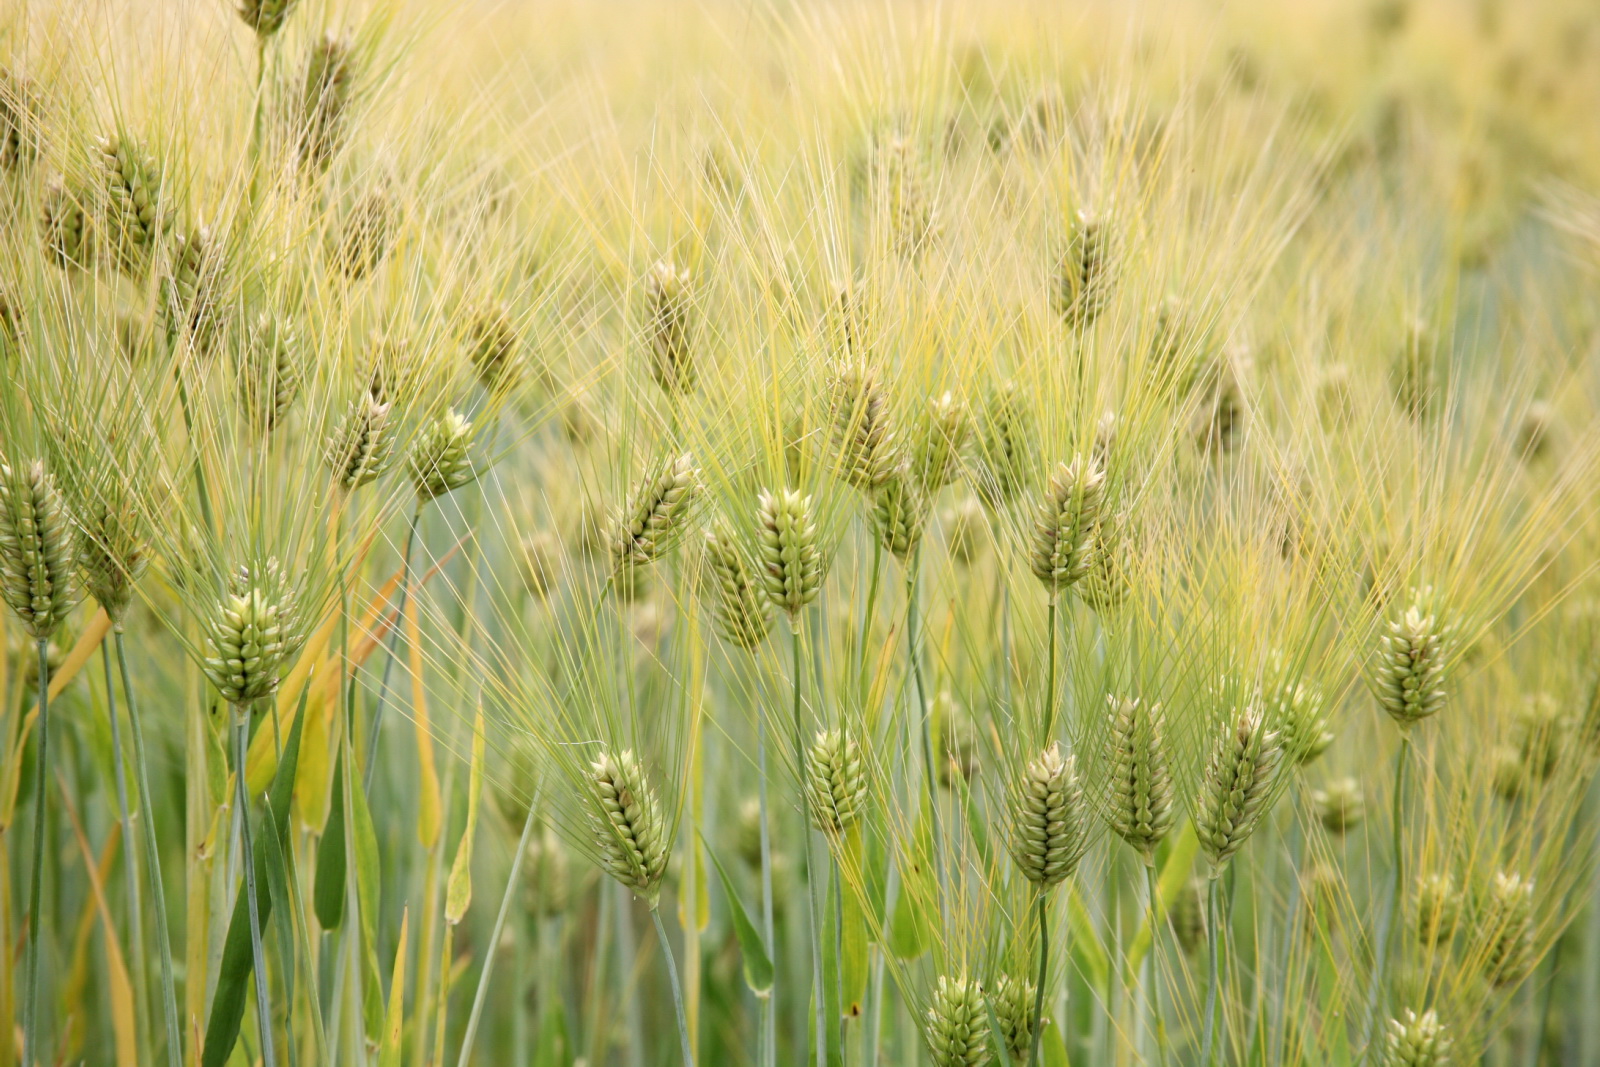 Green barley in a field